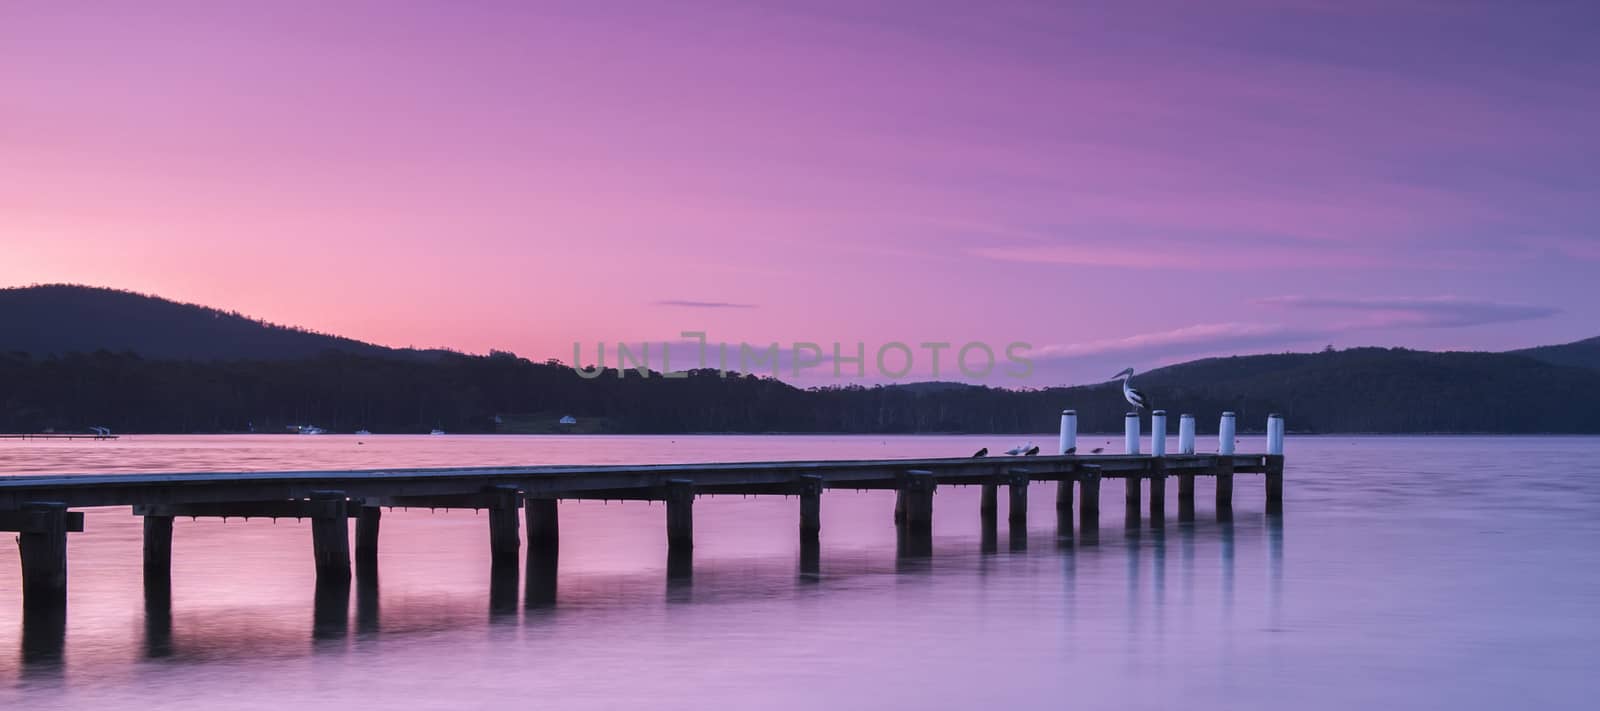 Port Arthur pier at dusk in Tasmania, Australia.